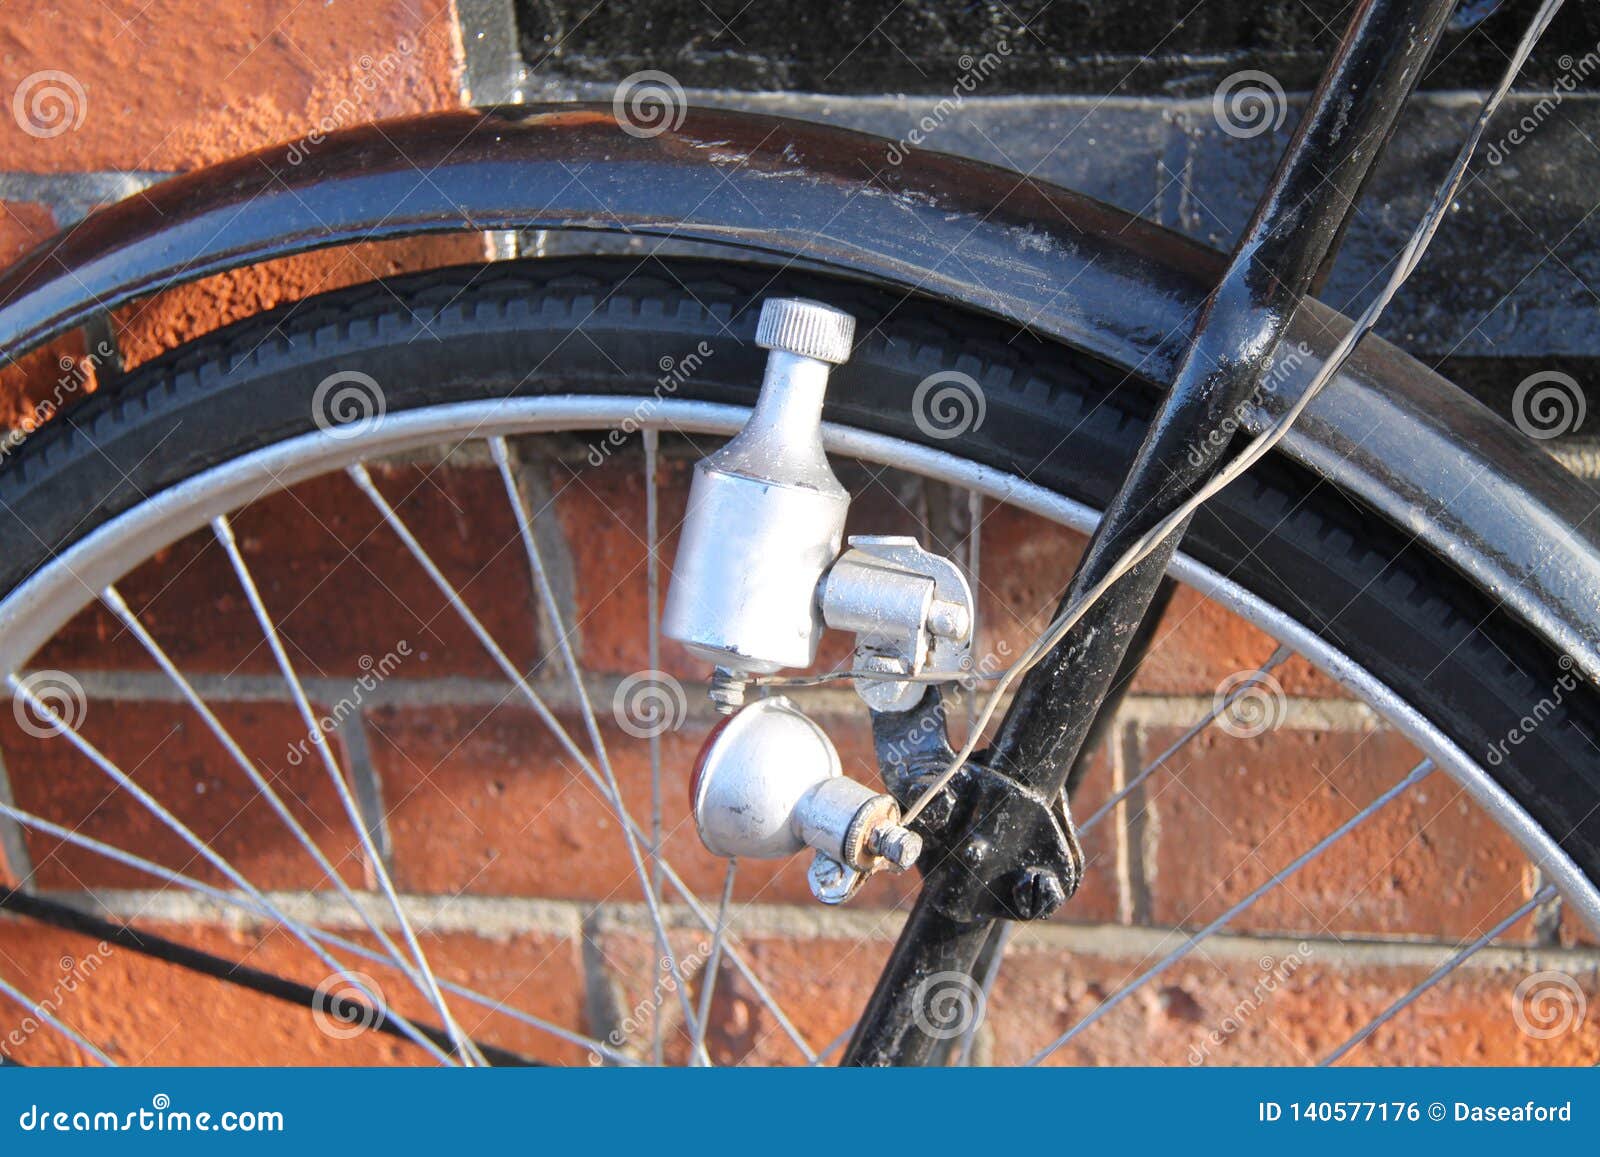 bicycle dynamo.